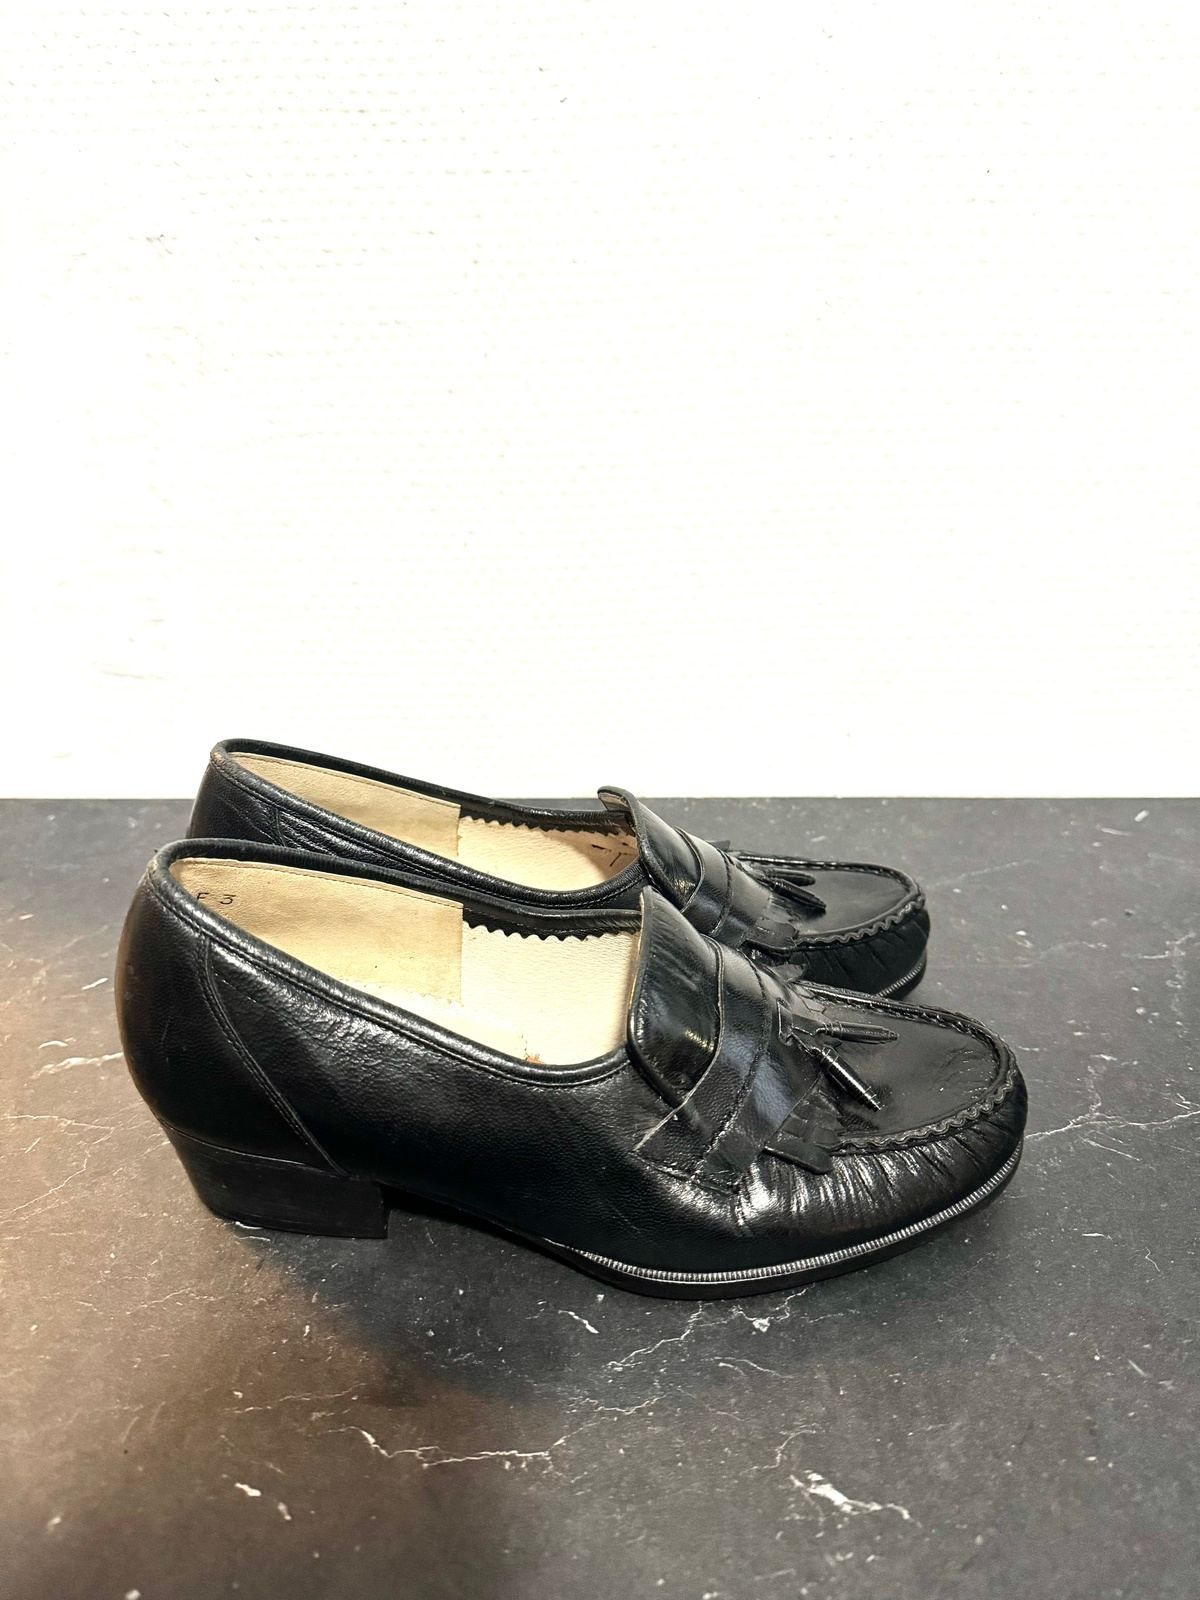 80's New Durea Loafer shoes